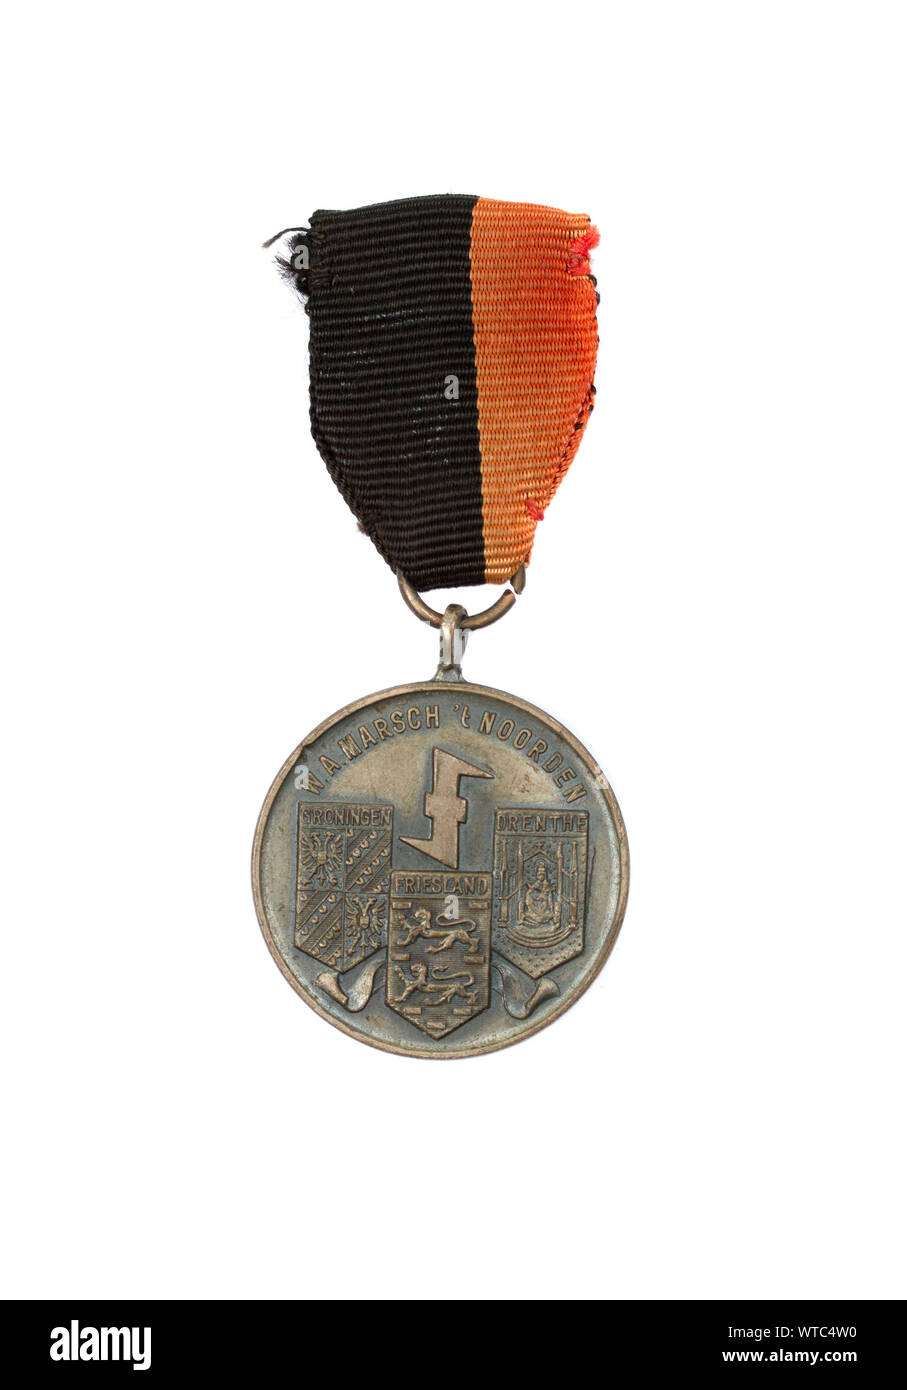 Dutch national socialist movement medal Stock Photo